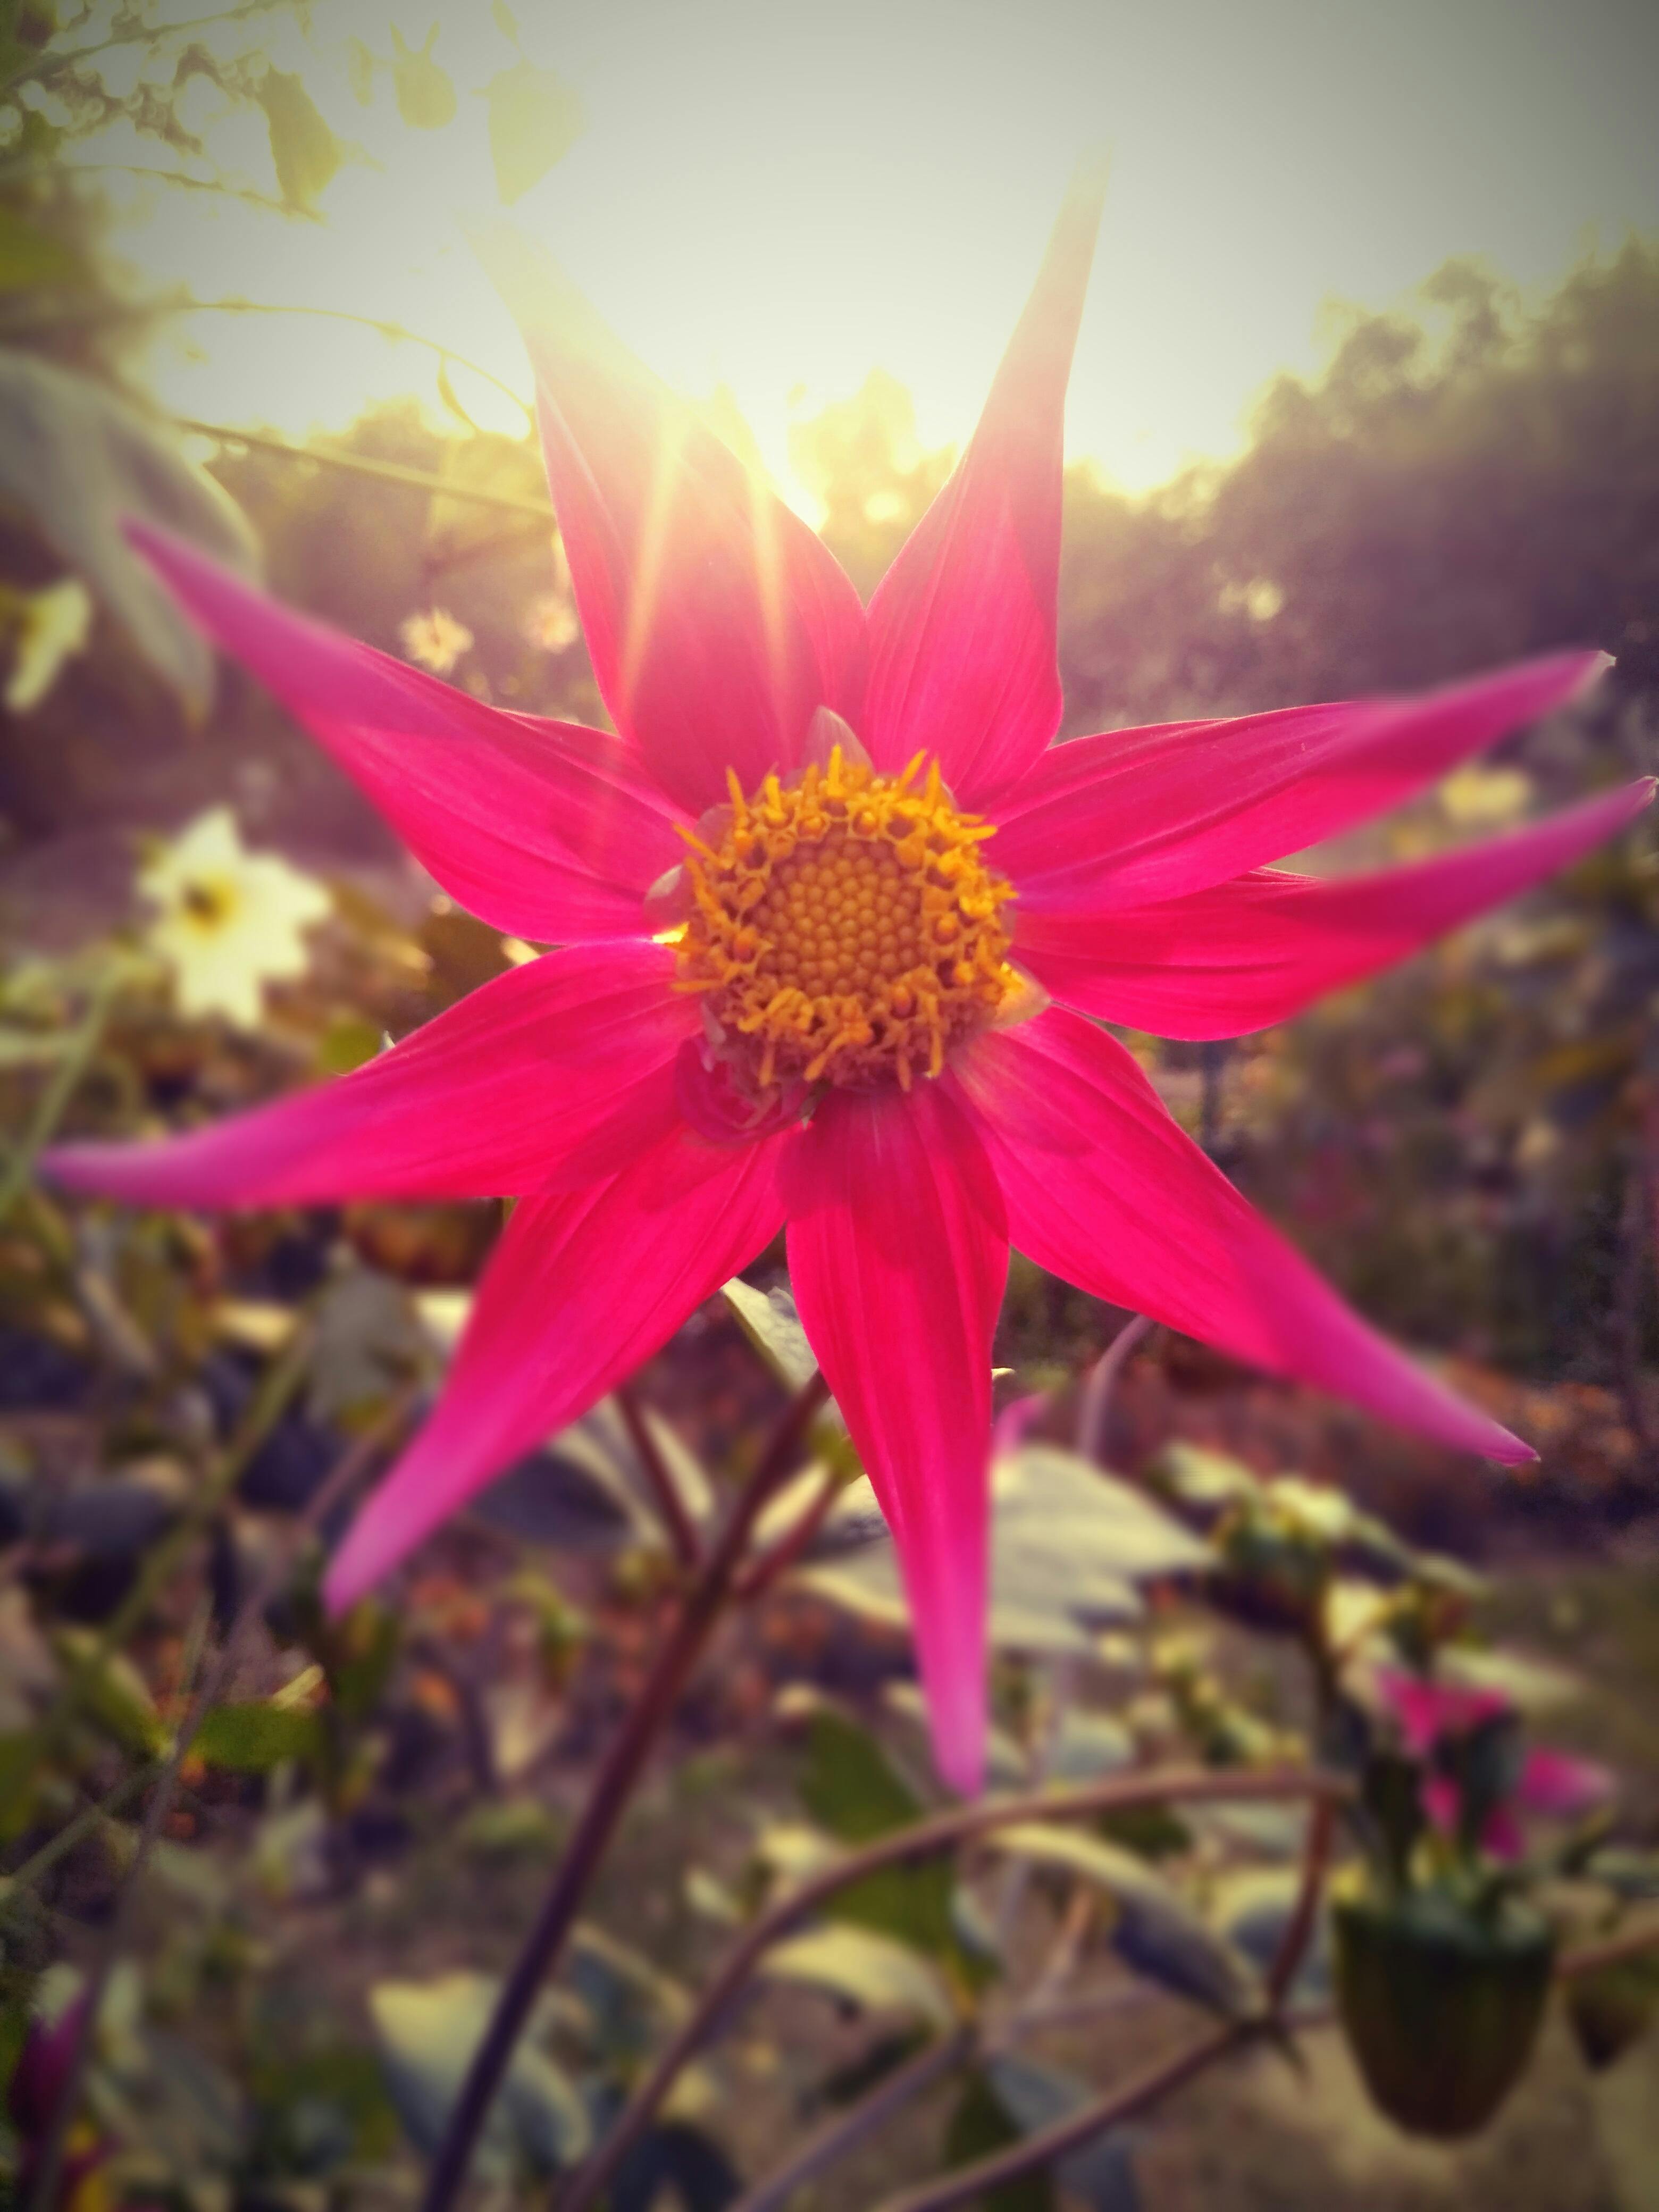 Free stock photo of #sunshine #nature #winter #sunlight #love #flower #plants